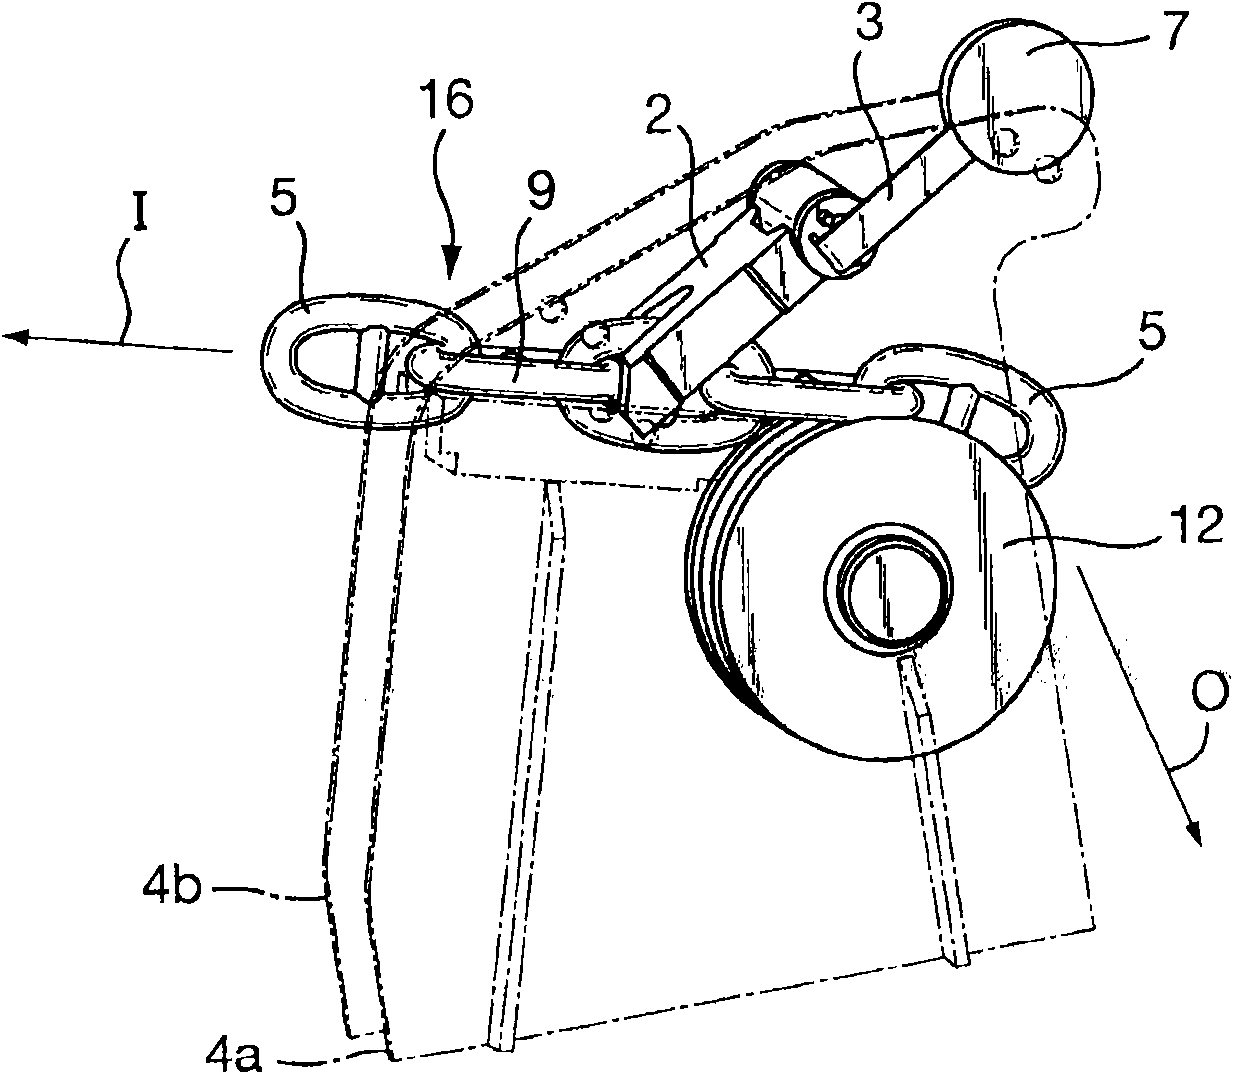 Chain brake device